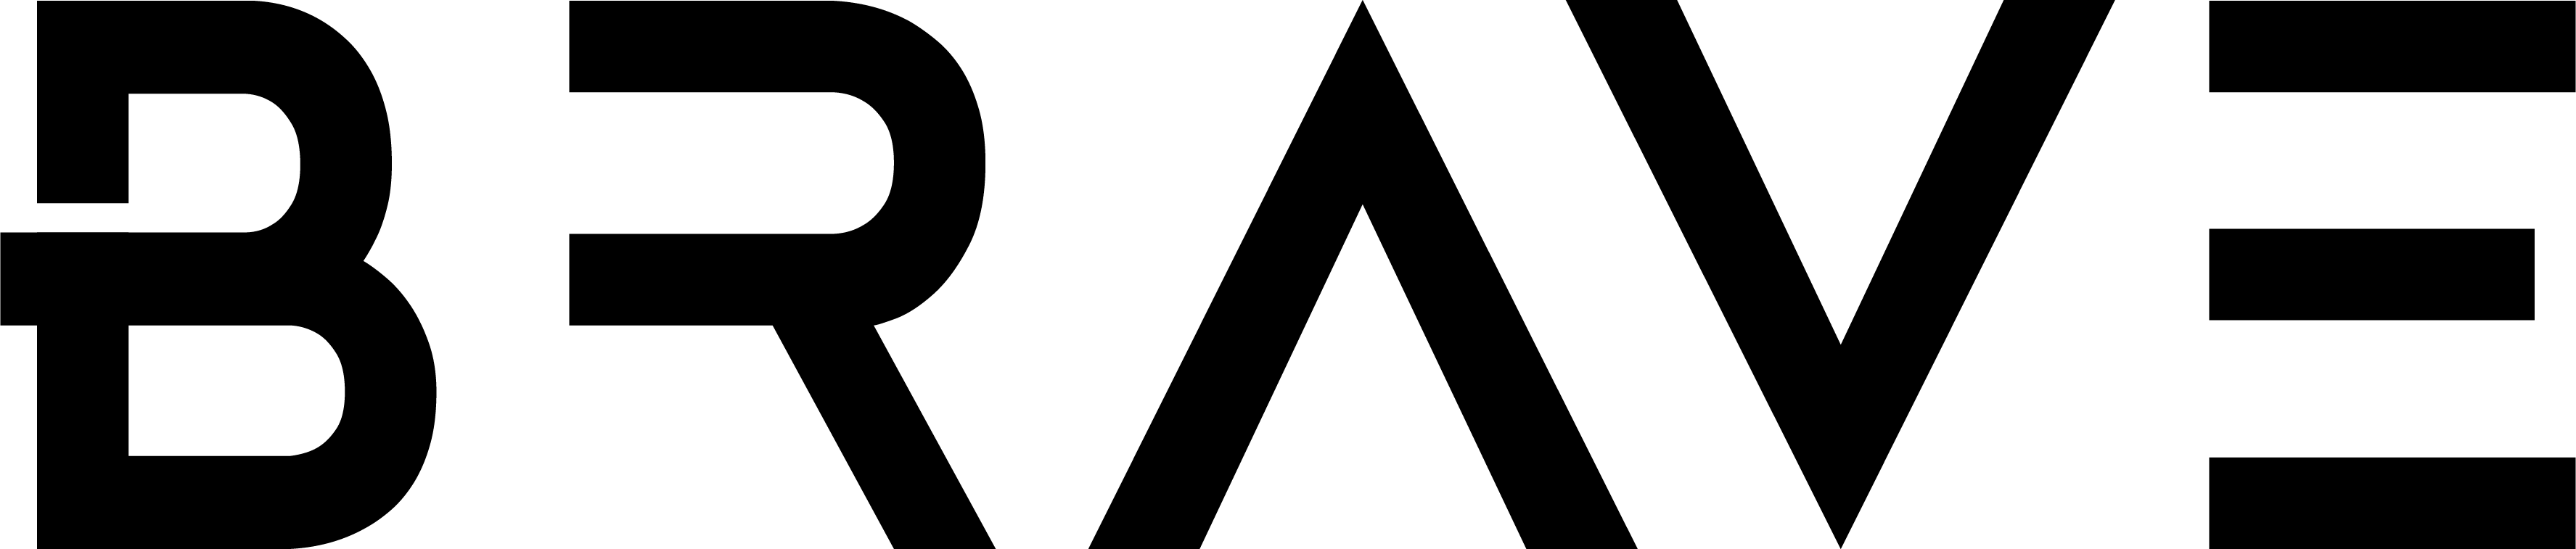 BRAVE logo